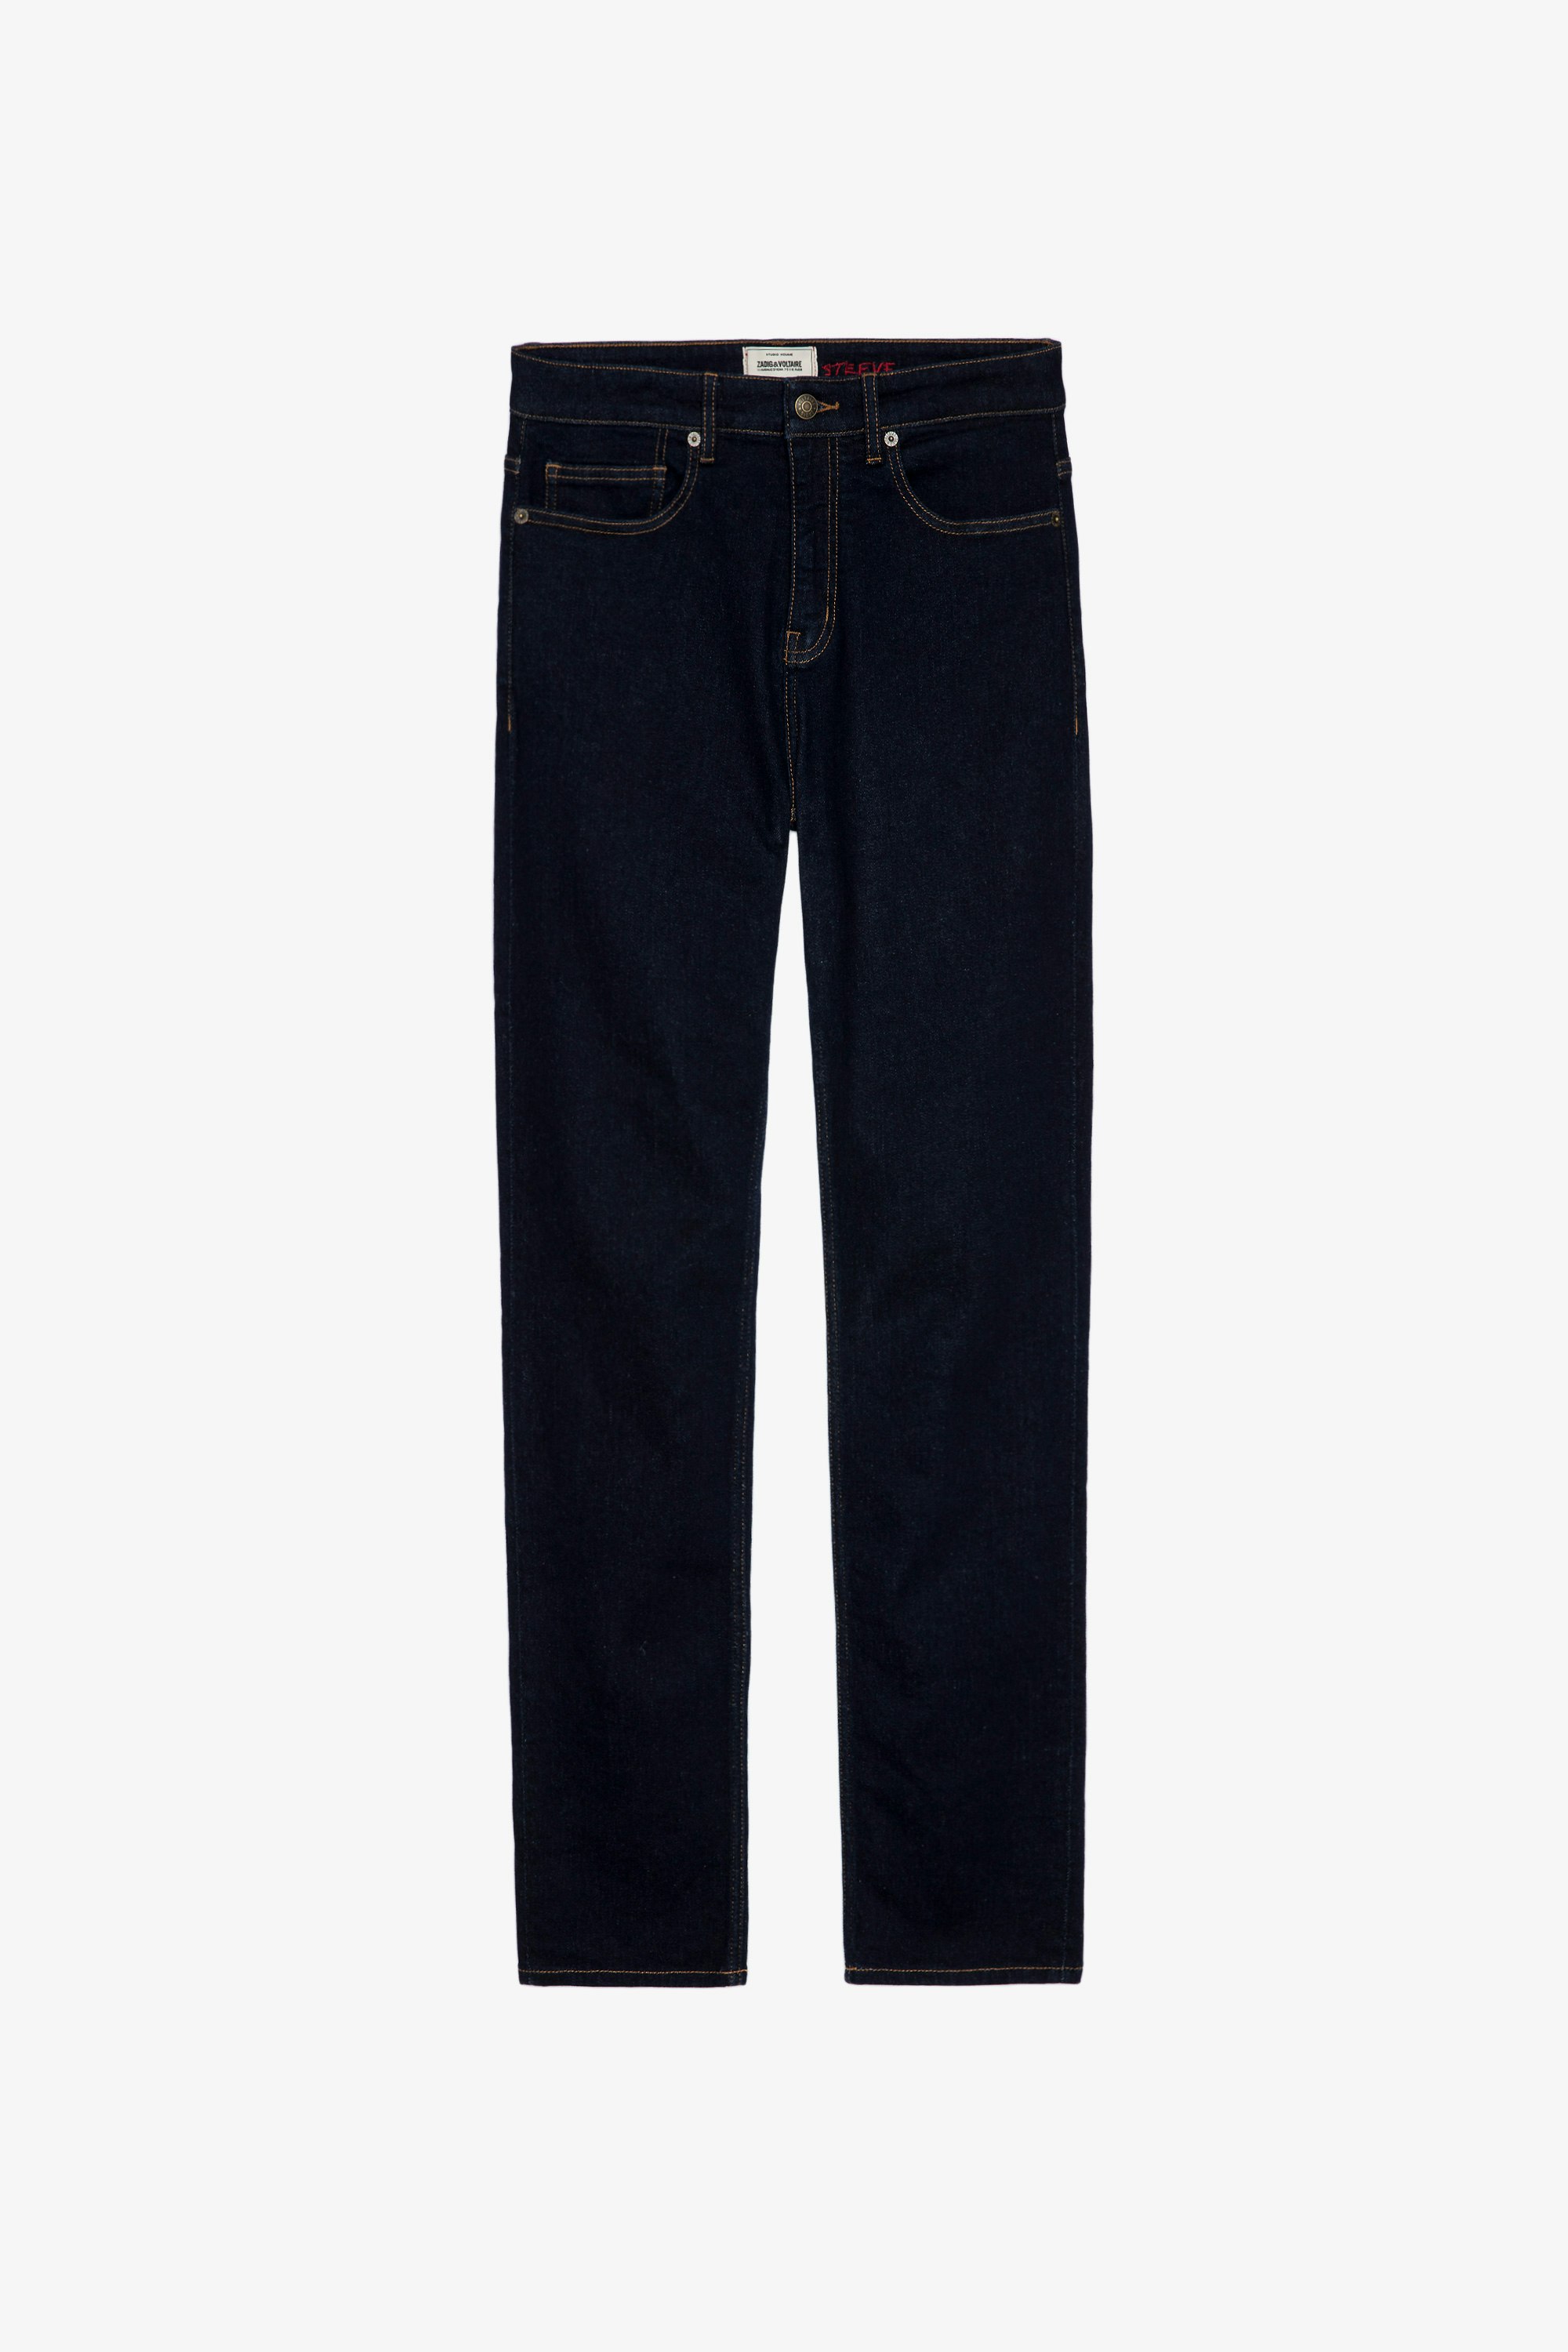 Steeve Jeans Men's denim jeans, cut at the knees